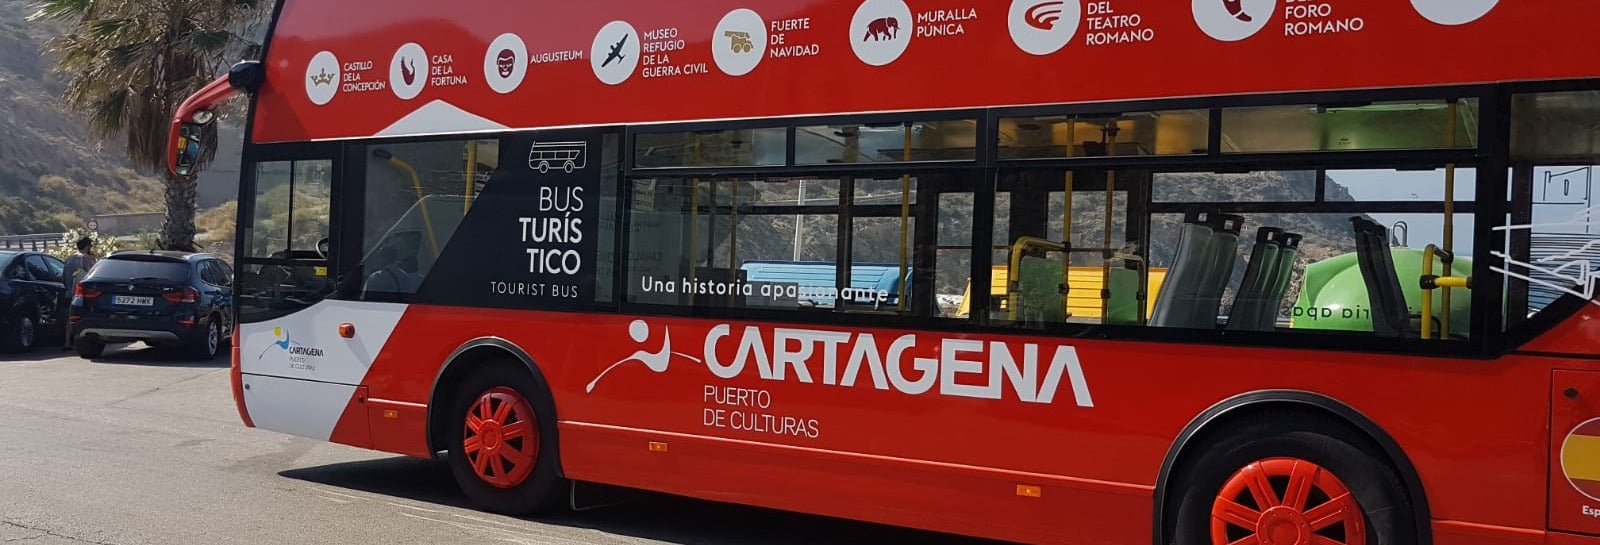 Tour panorâmico por Cartagena